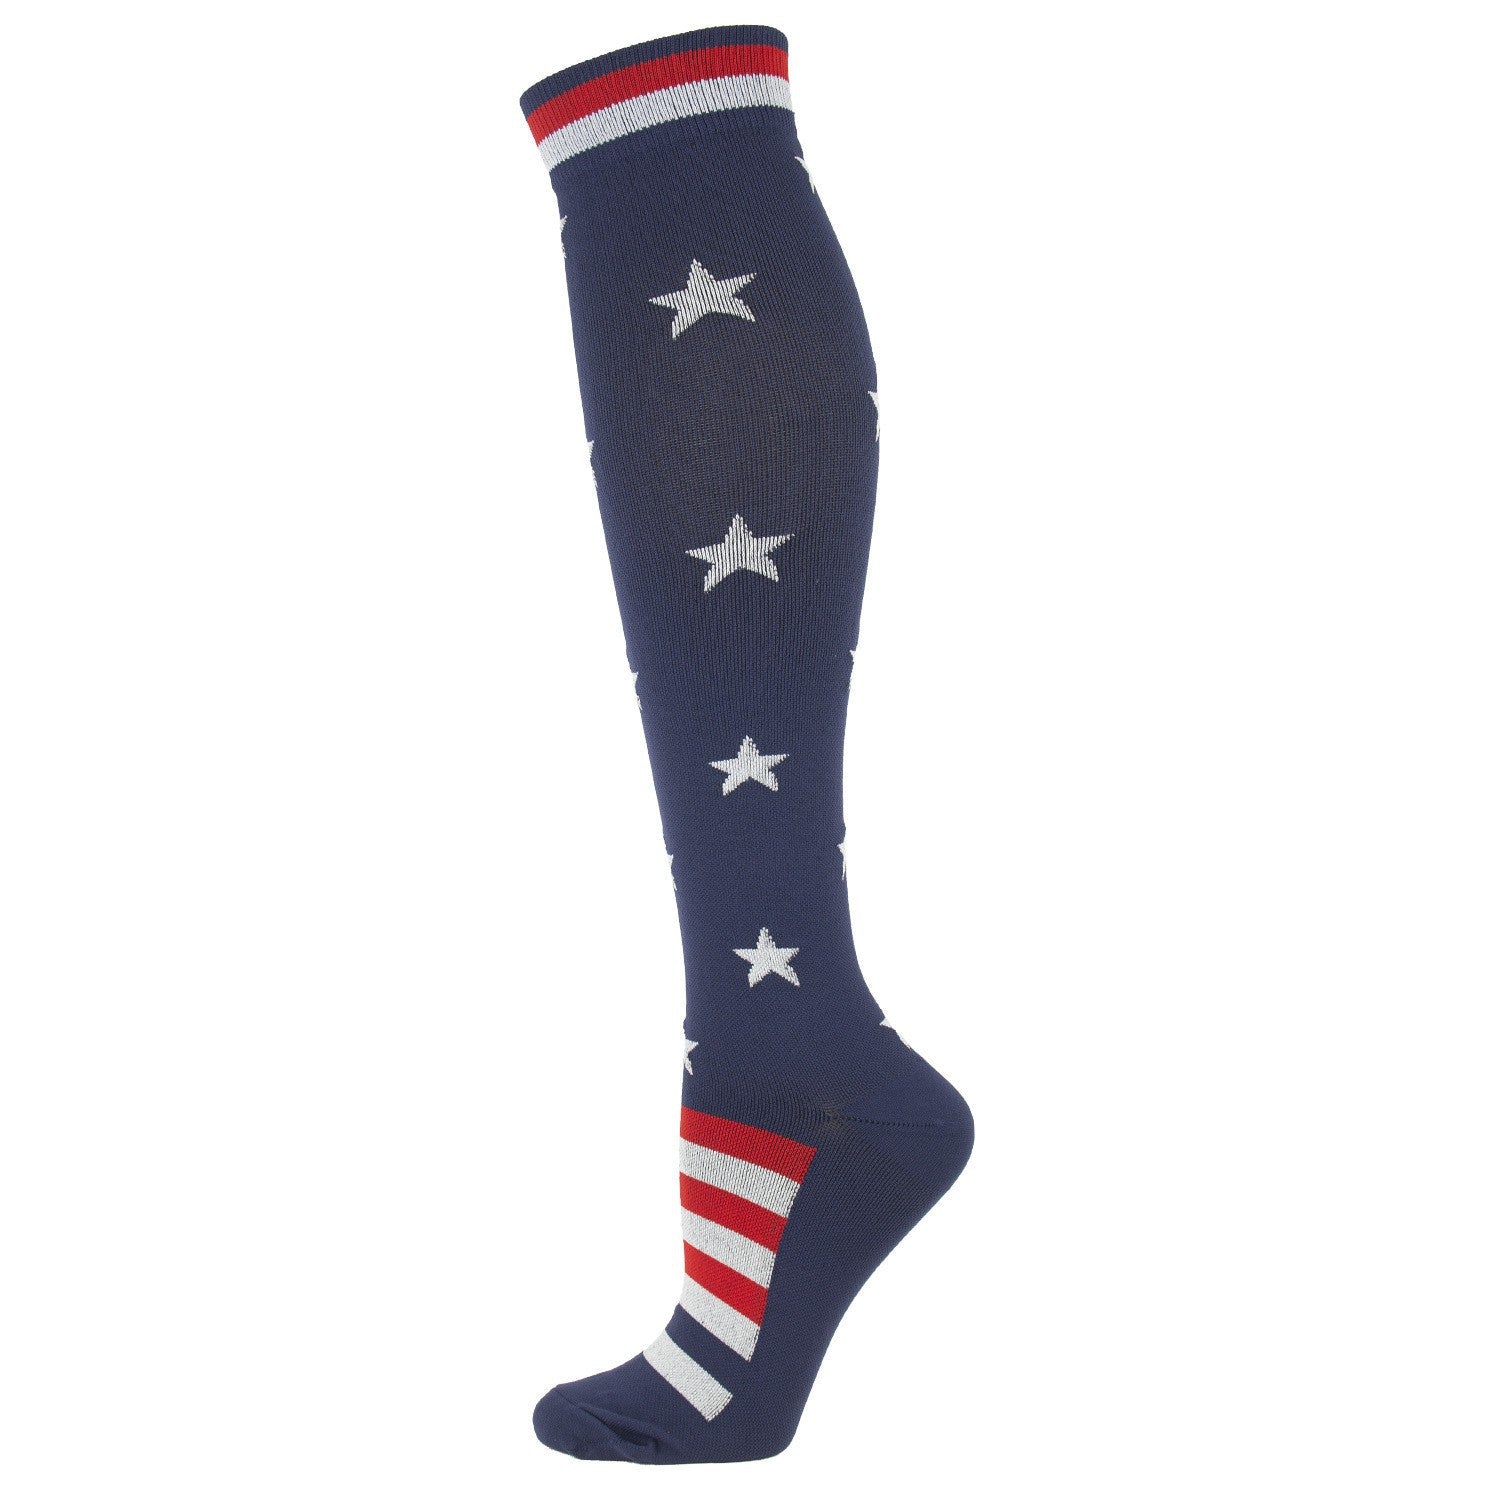 ALLRJ socks White red flag / M Outdoor Cycling Fitness Football Socks Compression Socks